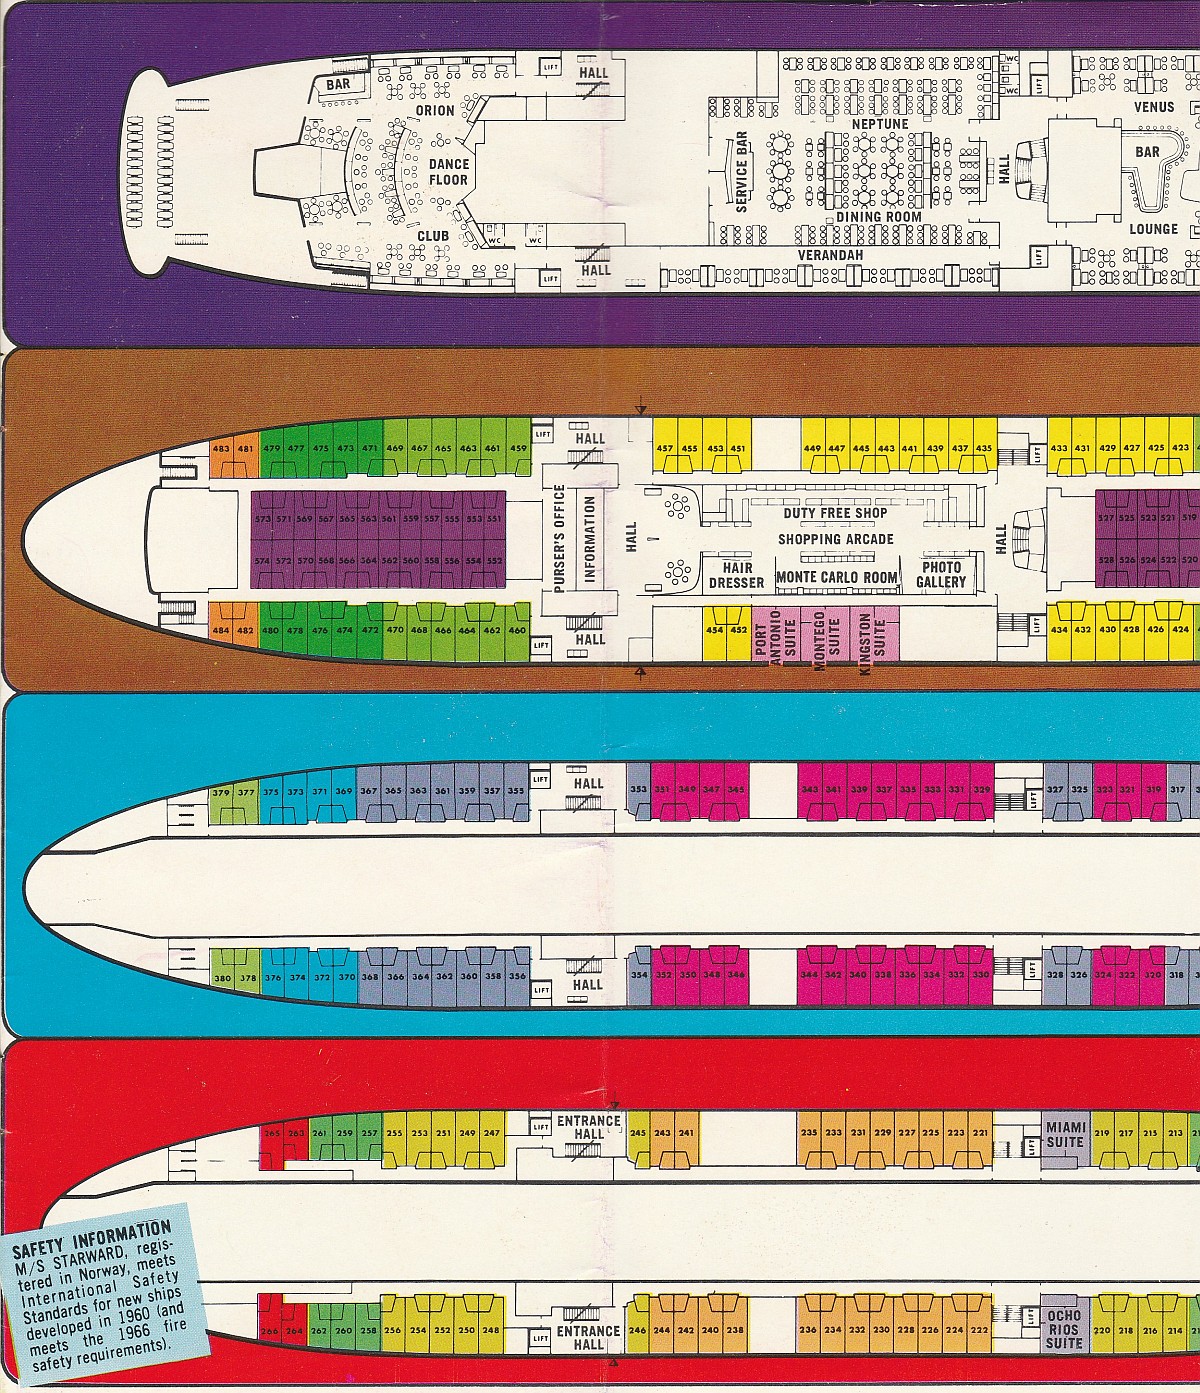 ms Starward Aft deck plans: Galaxy Deck, Atlantic Deck, Biscayne Deck and Caribbean deck aft